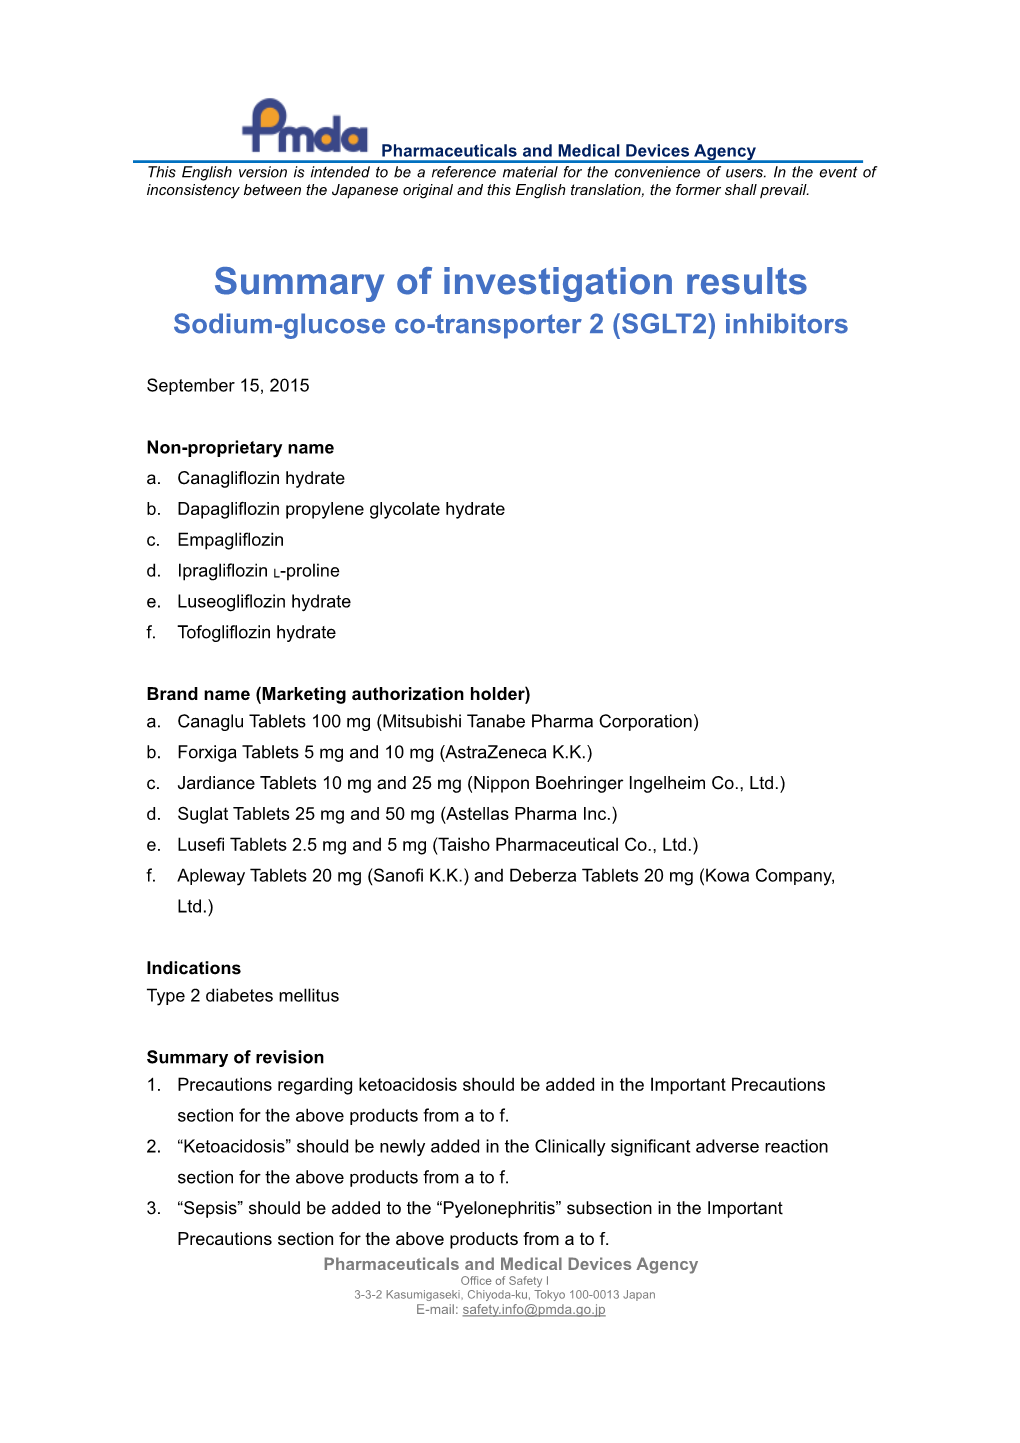 Summary of Investigation Results Sodium-Glucose Co-Transporter 2 (SGLT2) Inhibitors